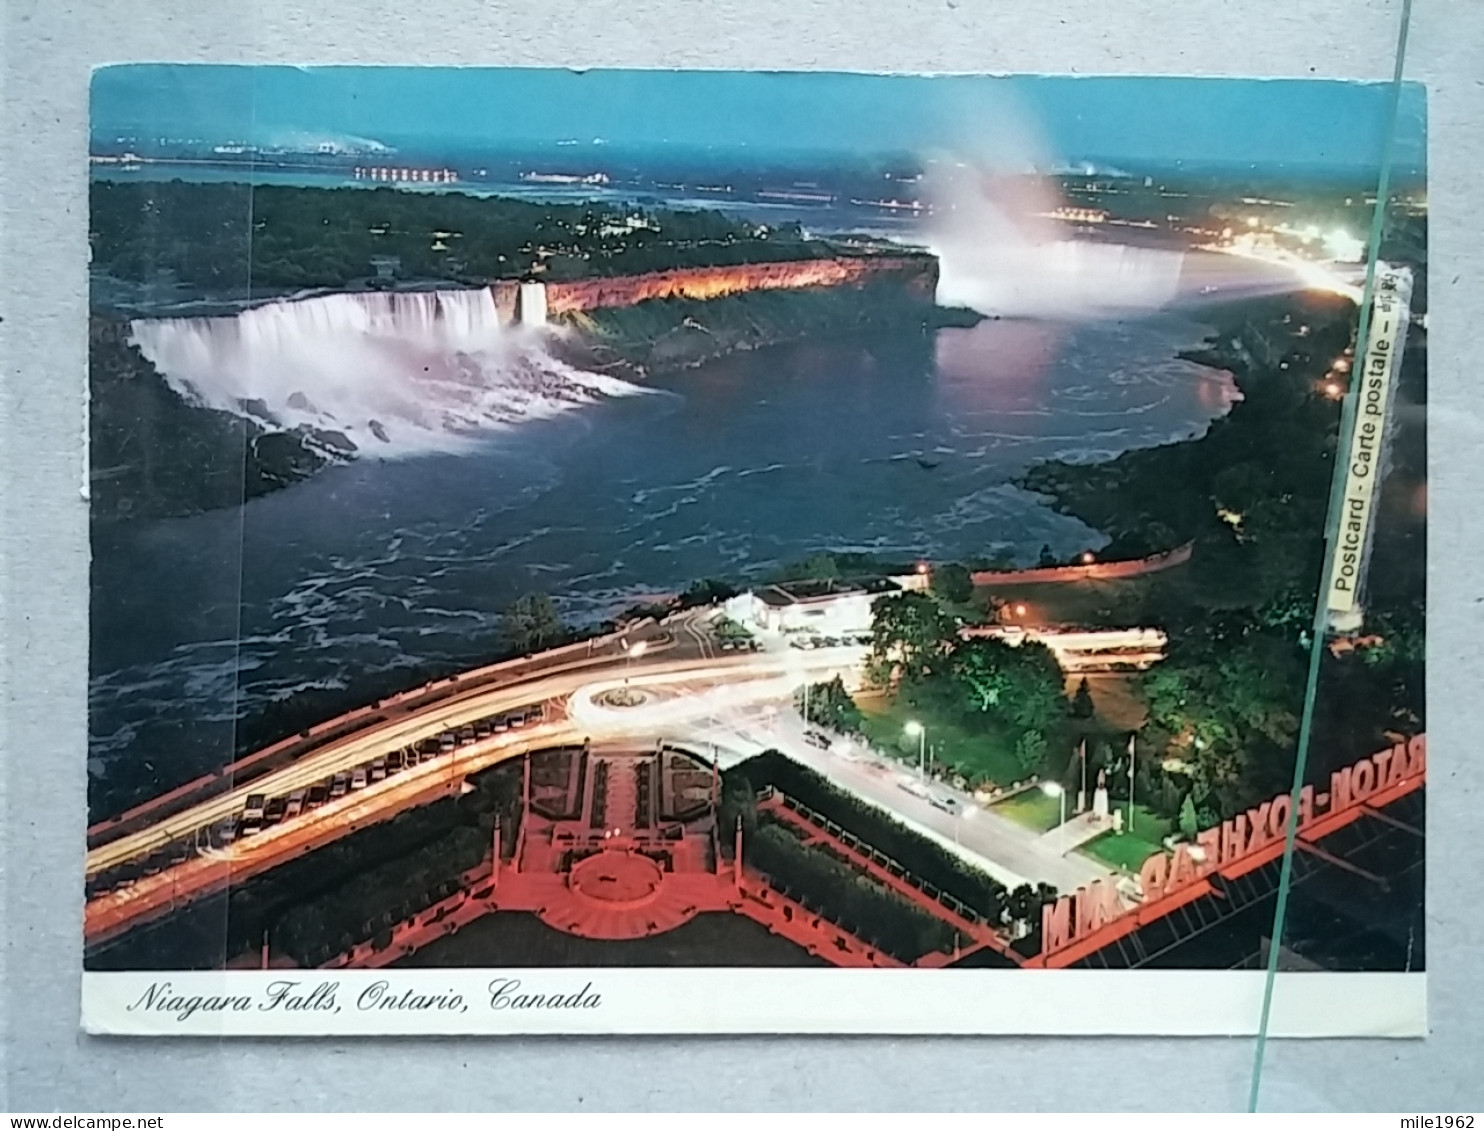 Kov 574-6 - NIAGARA FALLS, CANADA,  - Niagara Falls